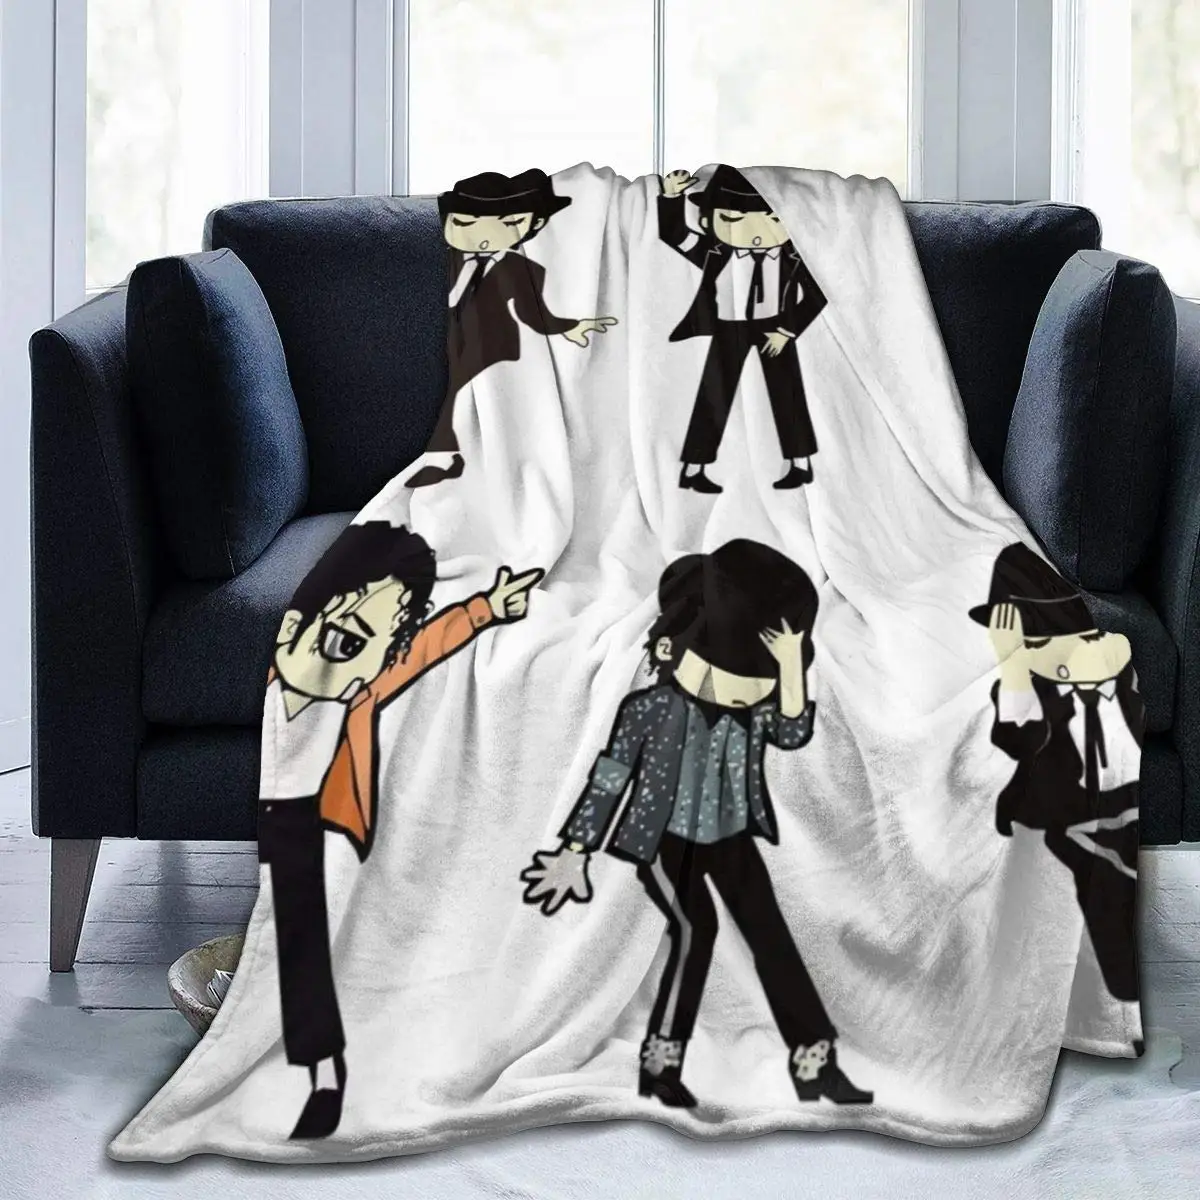 

Throw Blanket for Kids Teens Adults Lightweight Soft Warm Michael Jackson Cartoon Singer Microfiber All Season Living